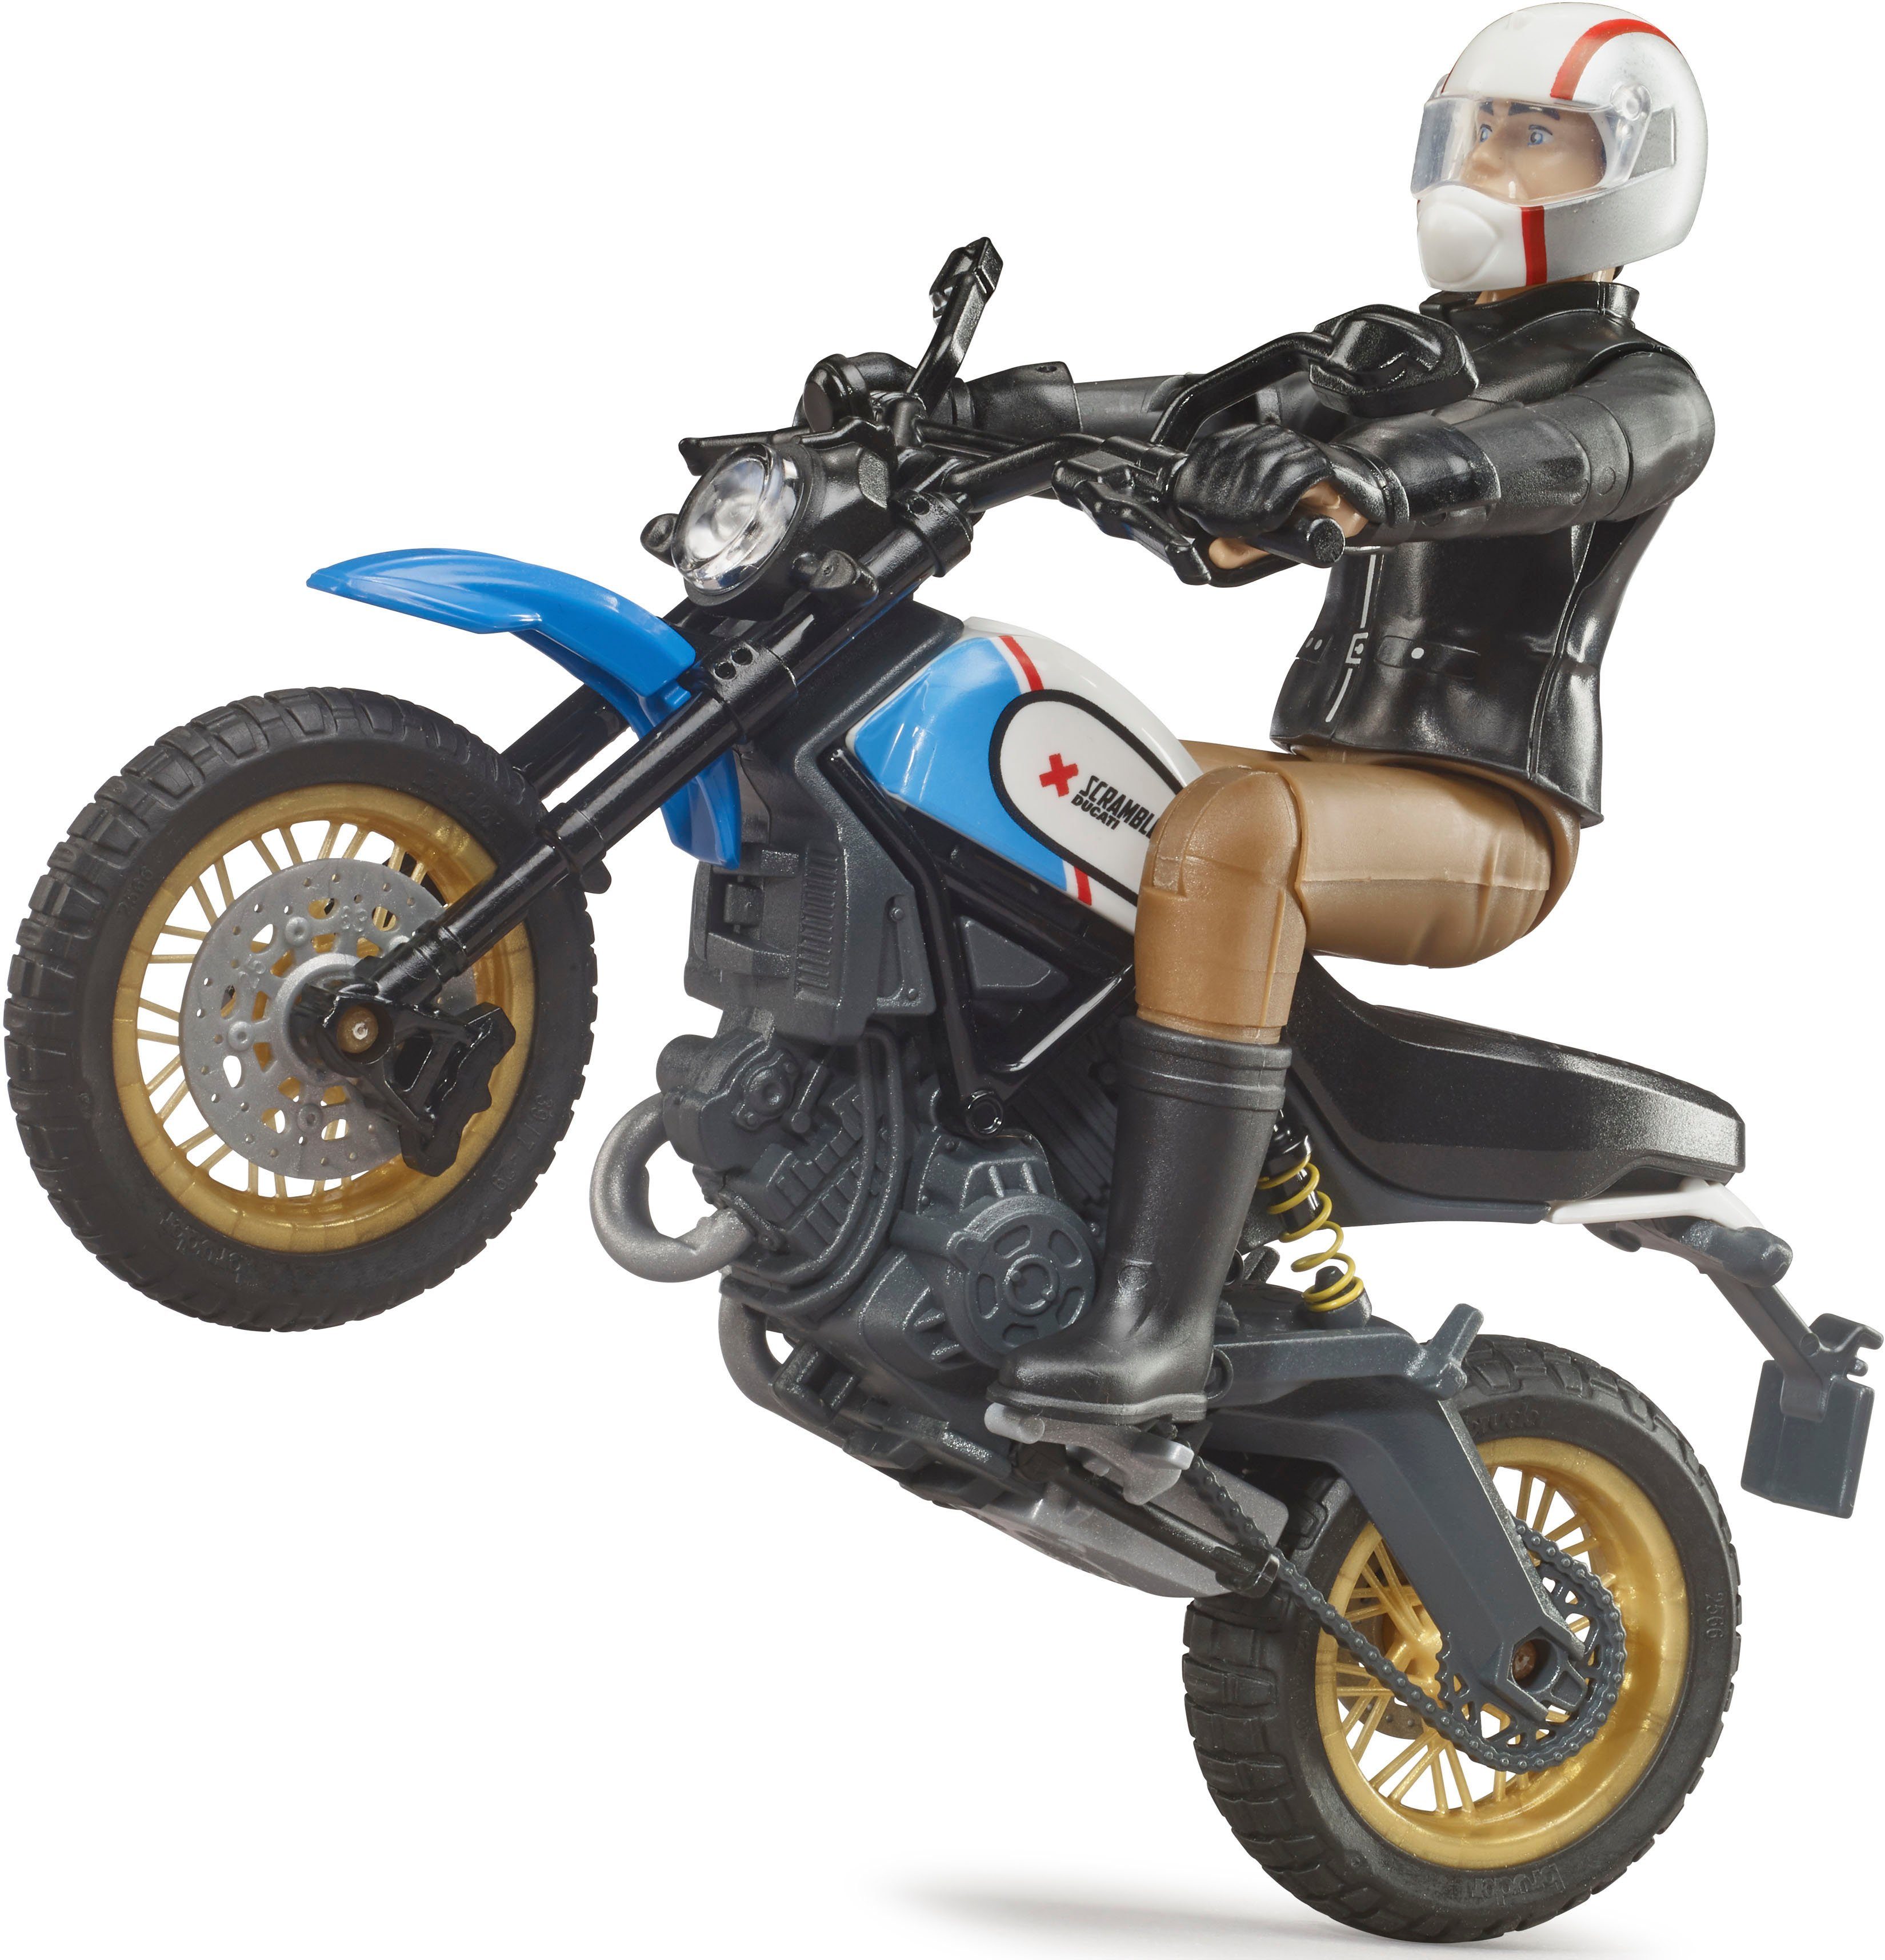 Spielzeug-Motorrad Ducati Germany mit Desert Made ; Bruder® Fahrer, Sled in